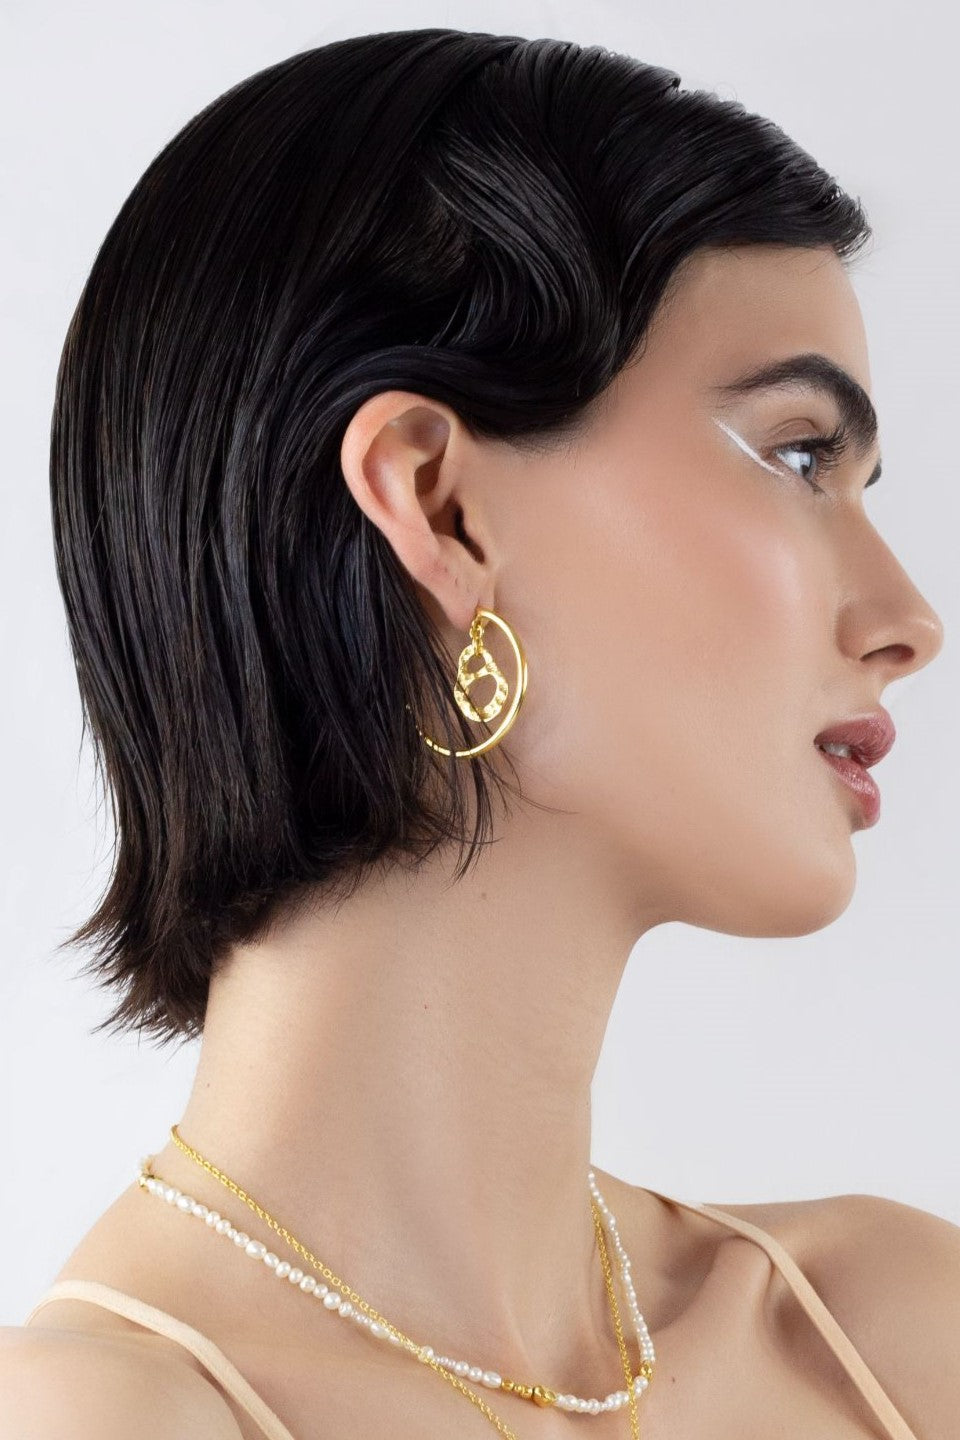 Celine Large Gold Hoop Earrings Mamour Paris Jewelry Jewellery